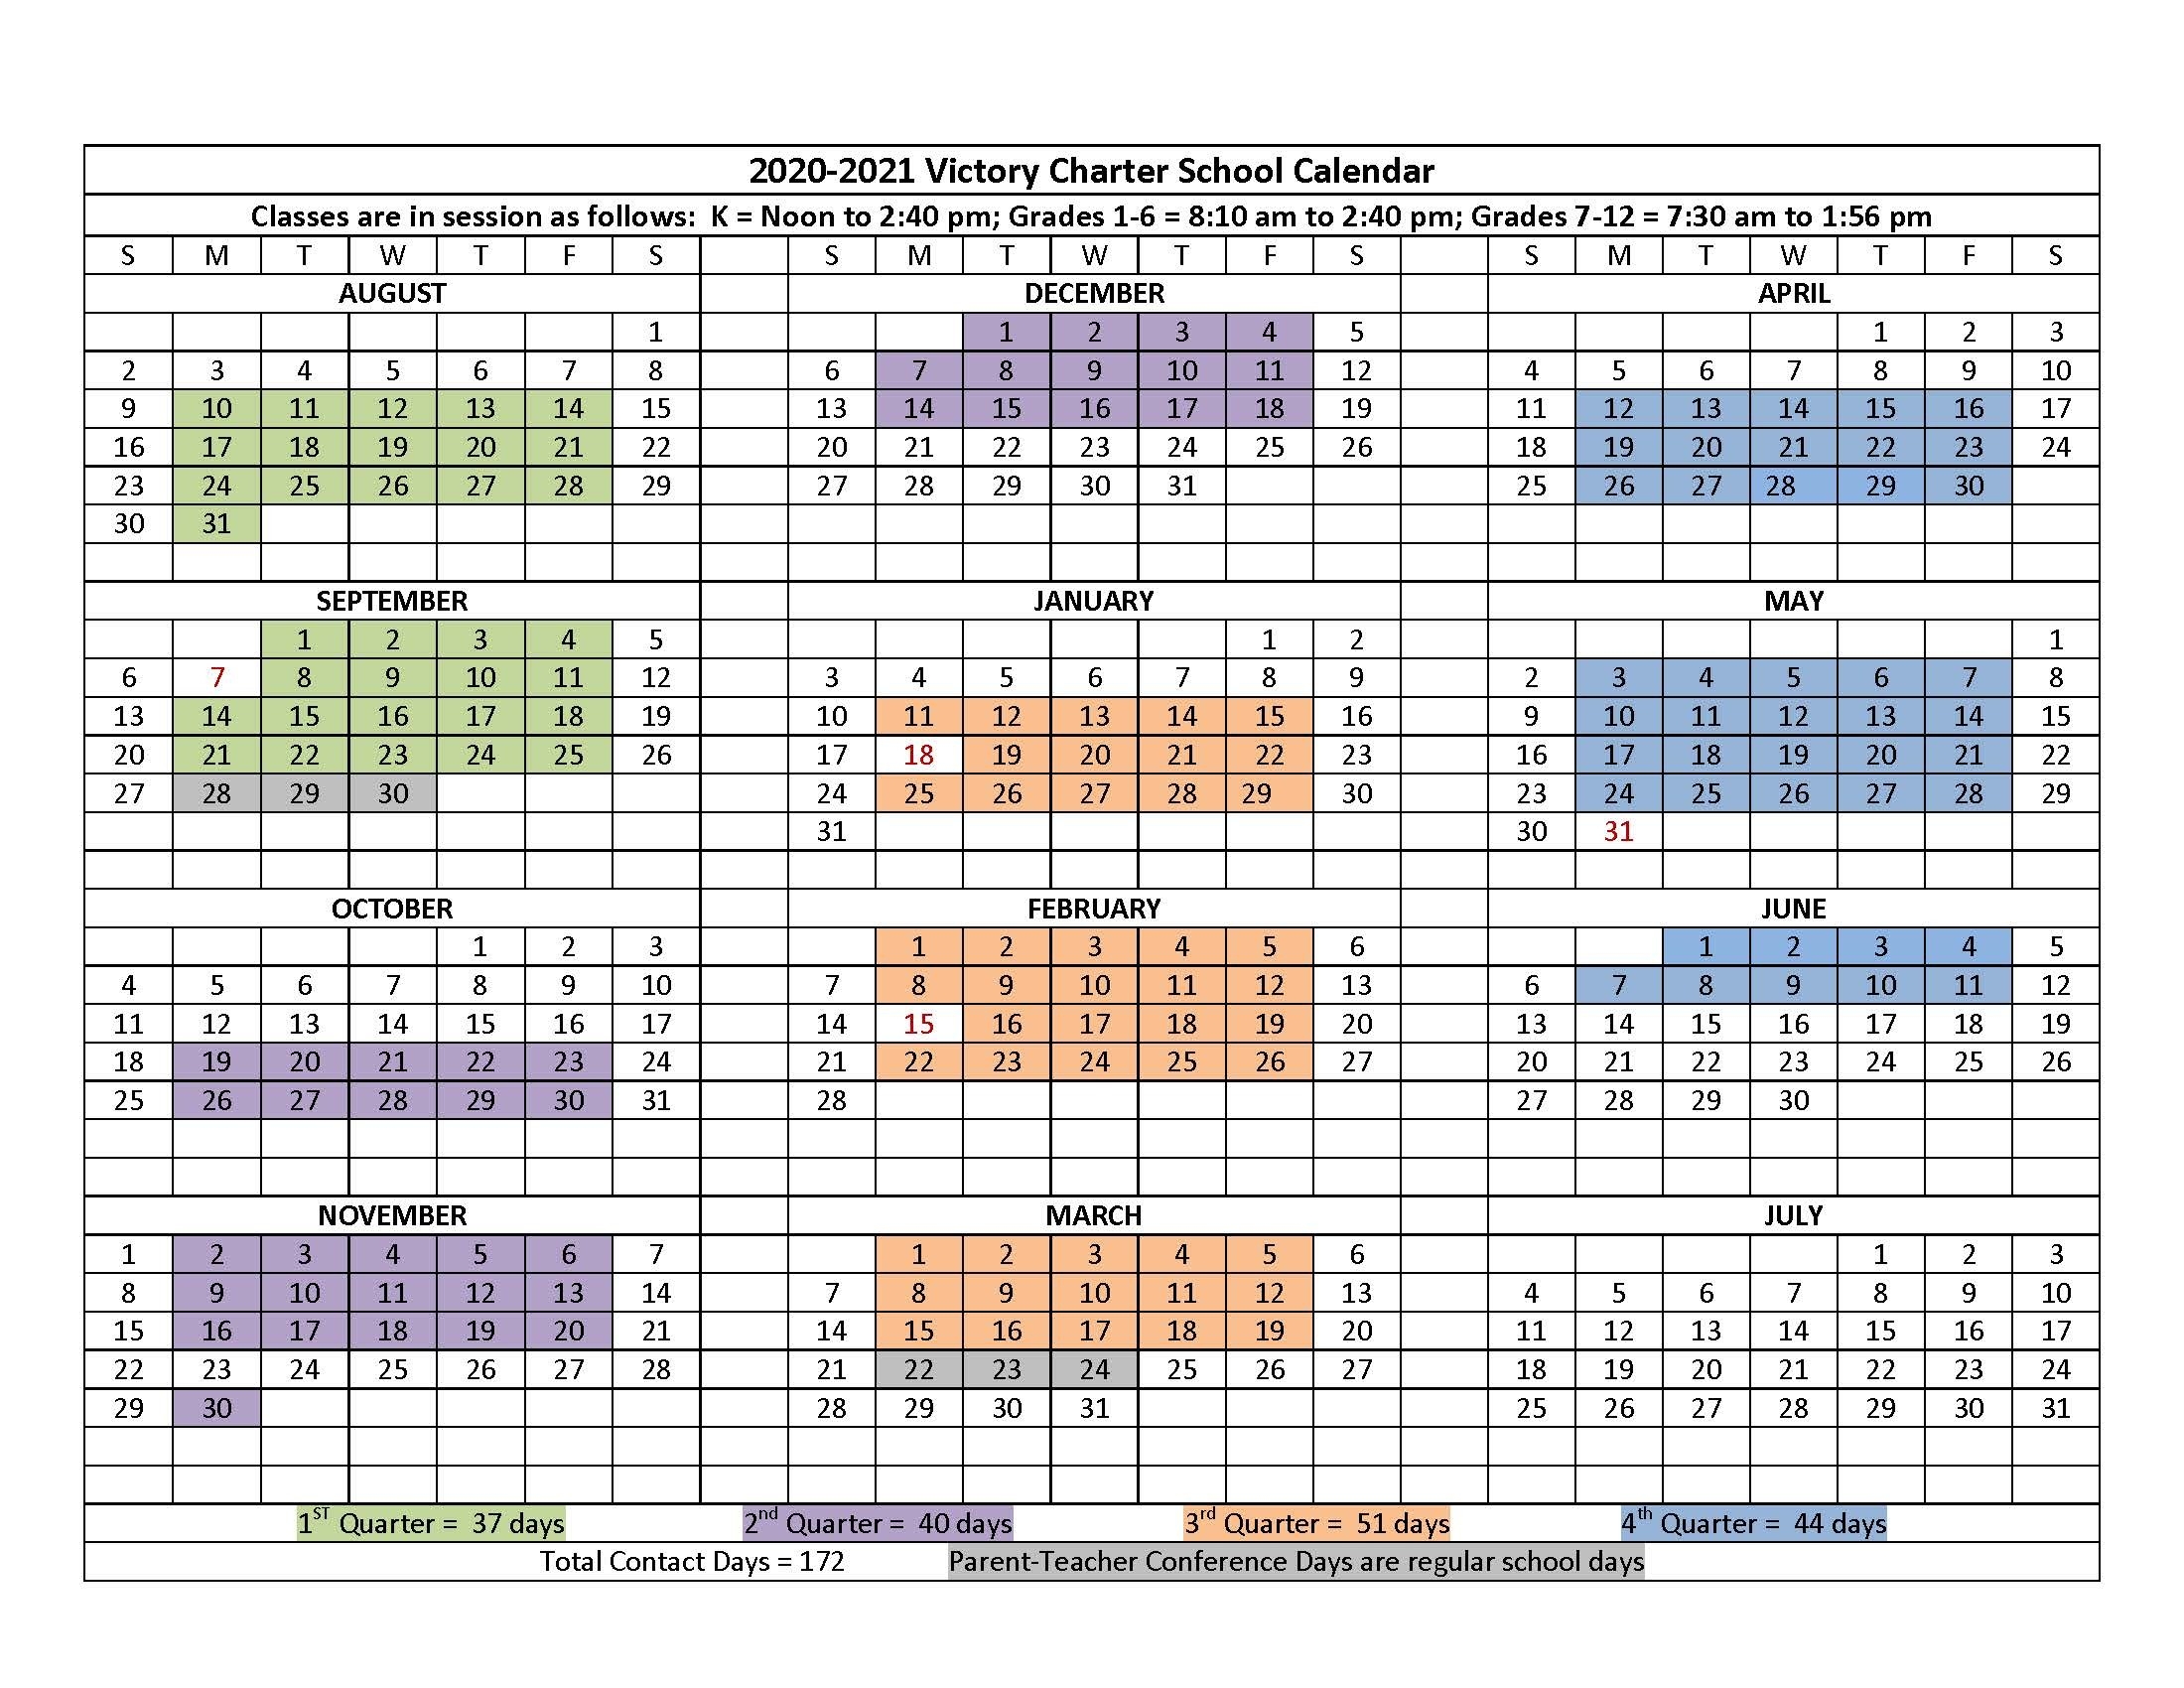 2020-2021 Calendar | Victory Charter School-Rut Prediction 2021 Louisiana